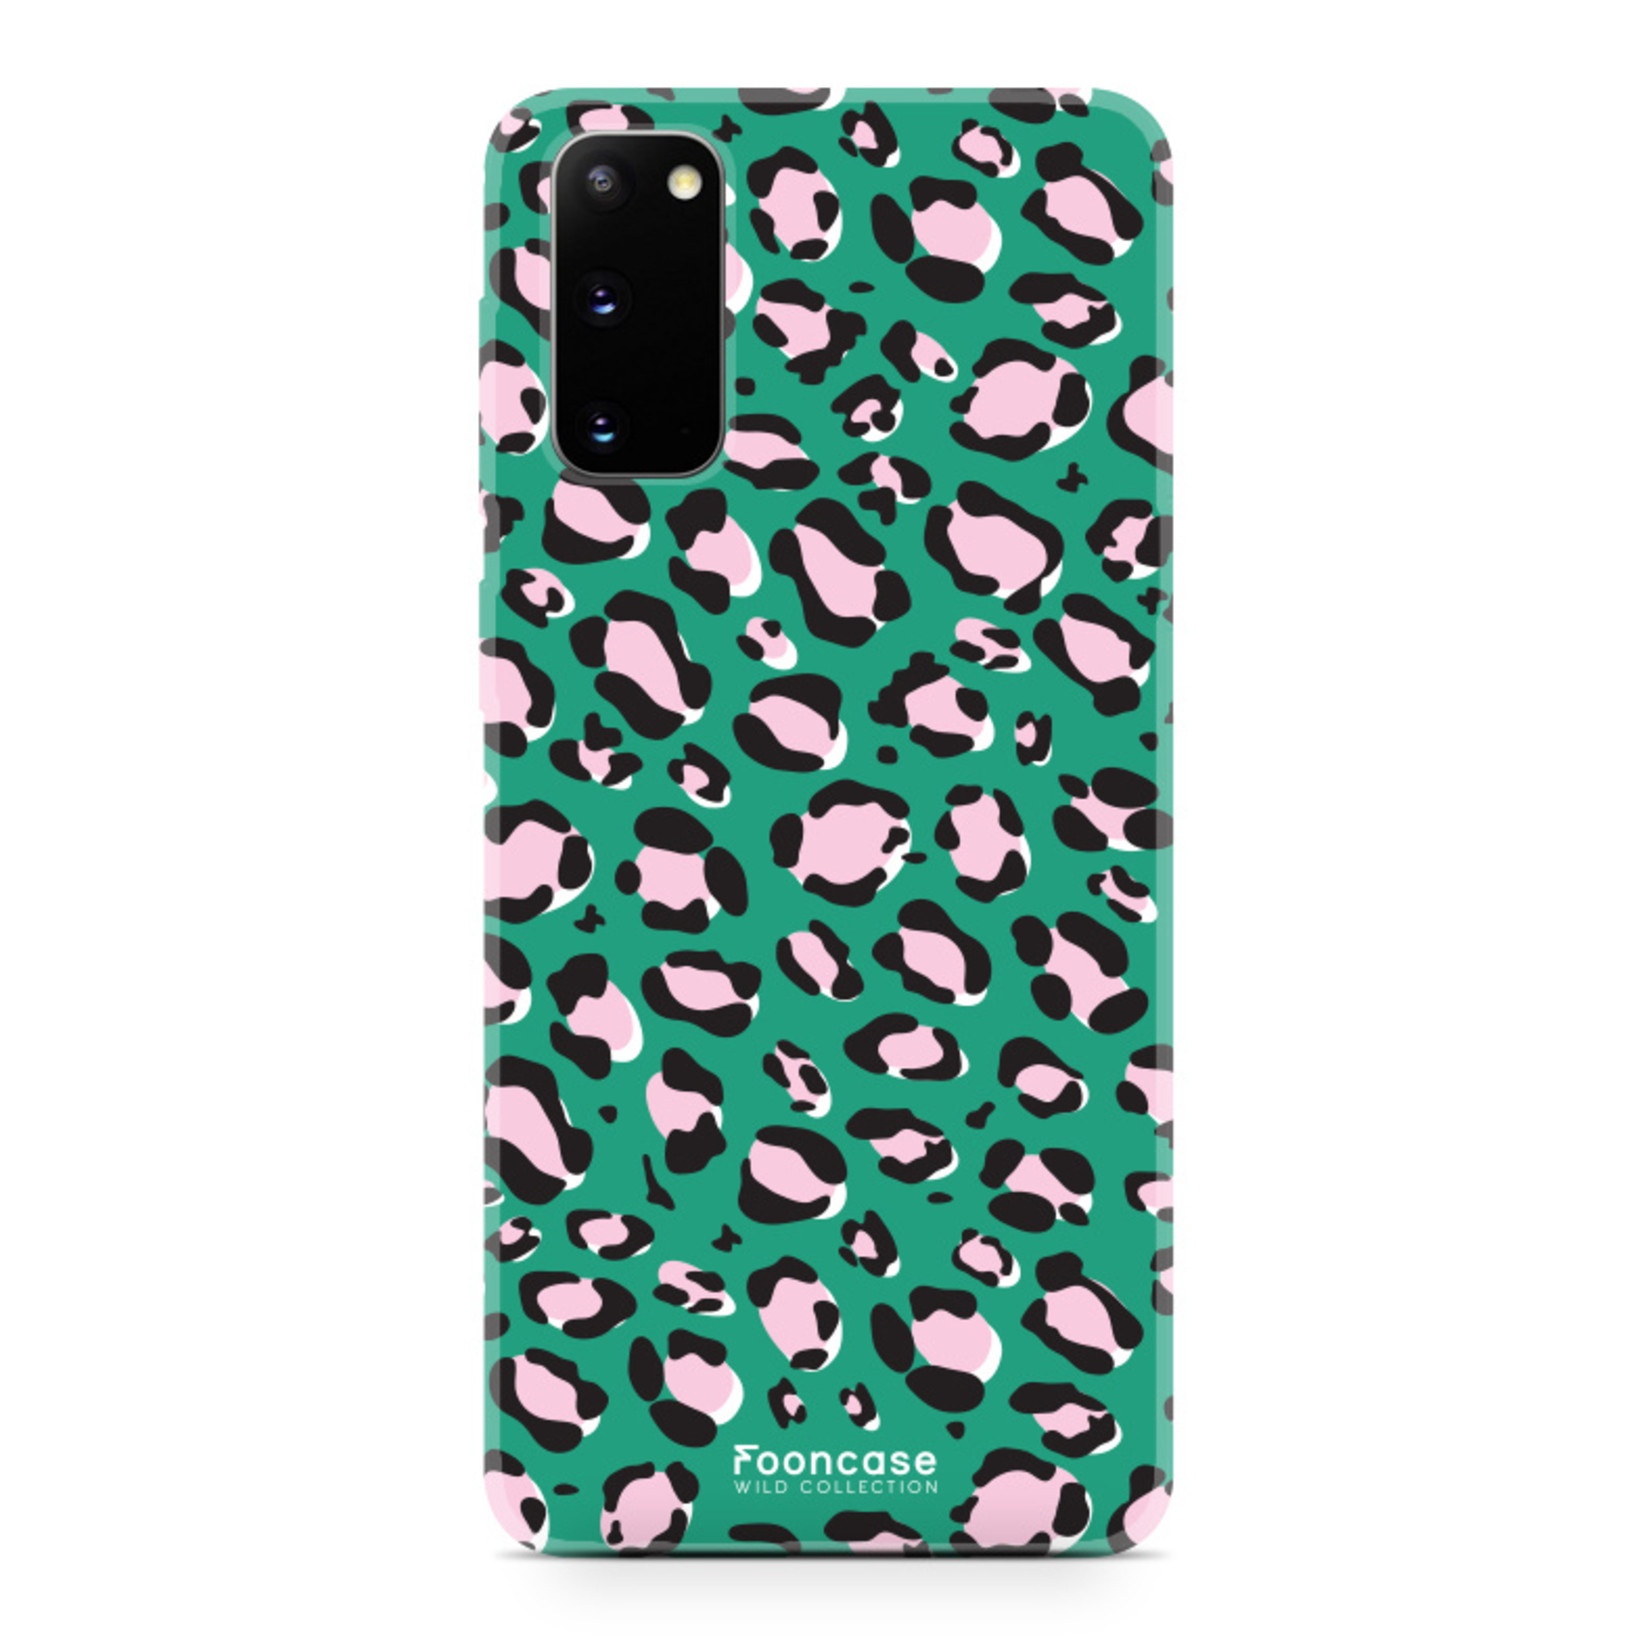 FOONCASE Samsung Galaxy S20 hoesje TPU Soft Case - Back Cover - Luipaard / Leopard print / Groen